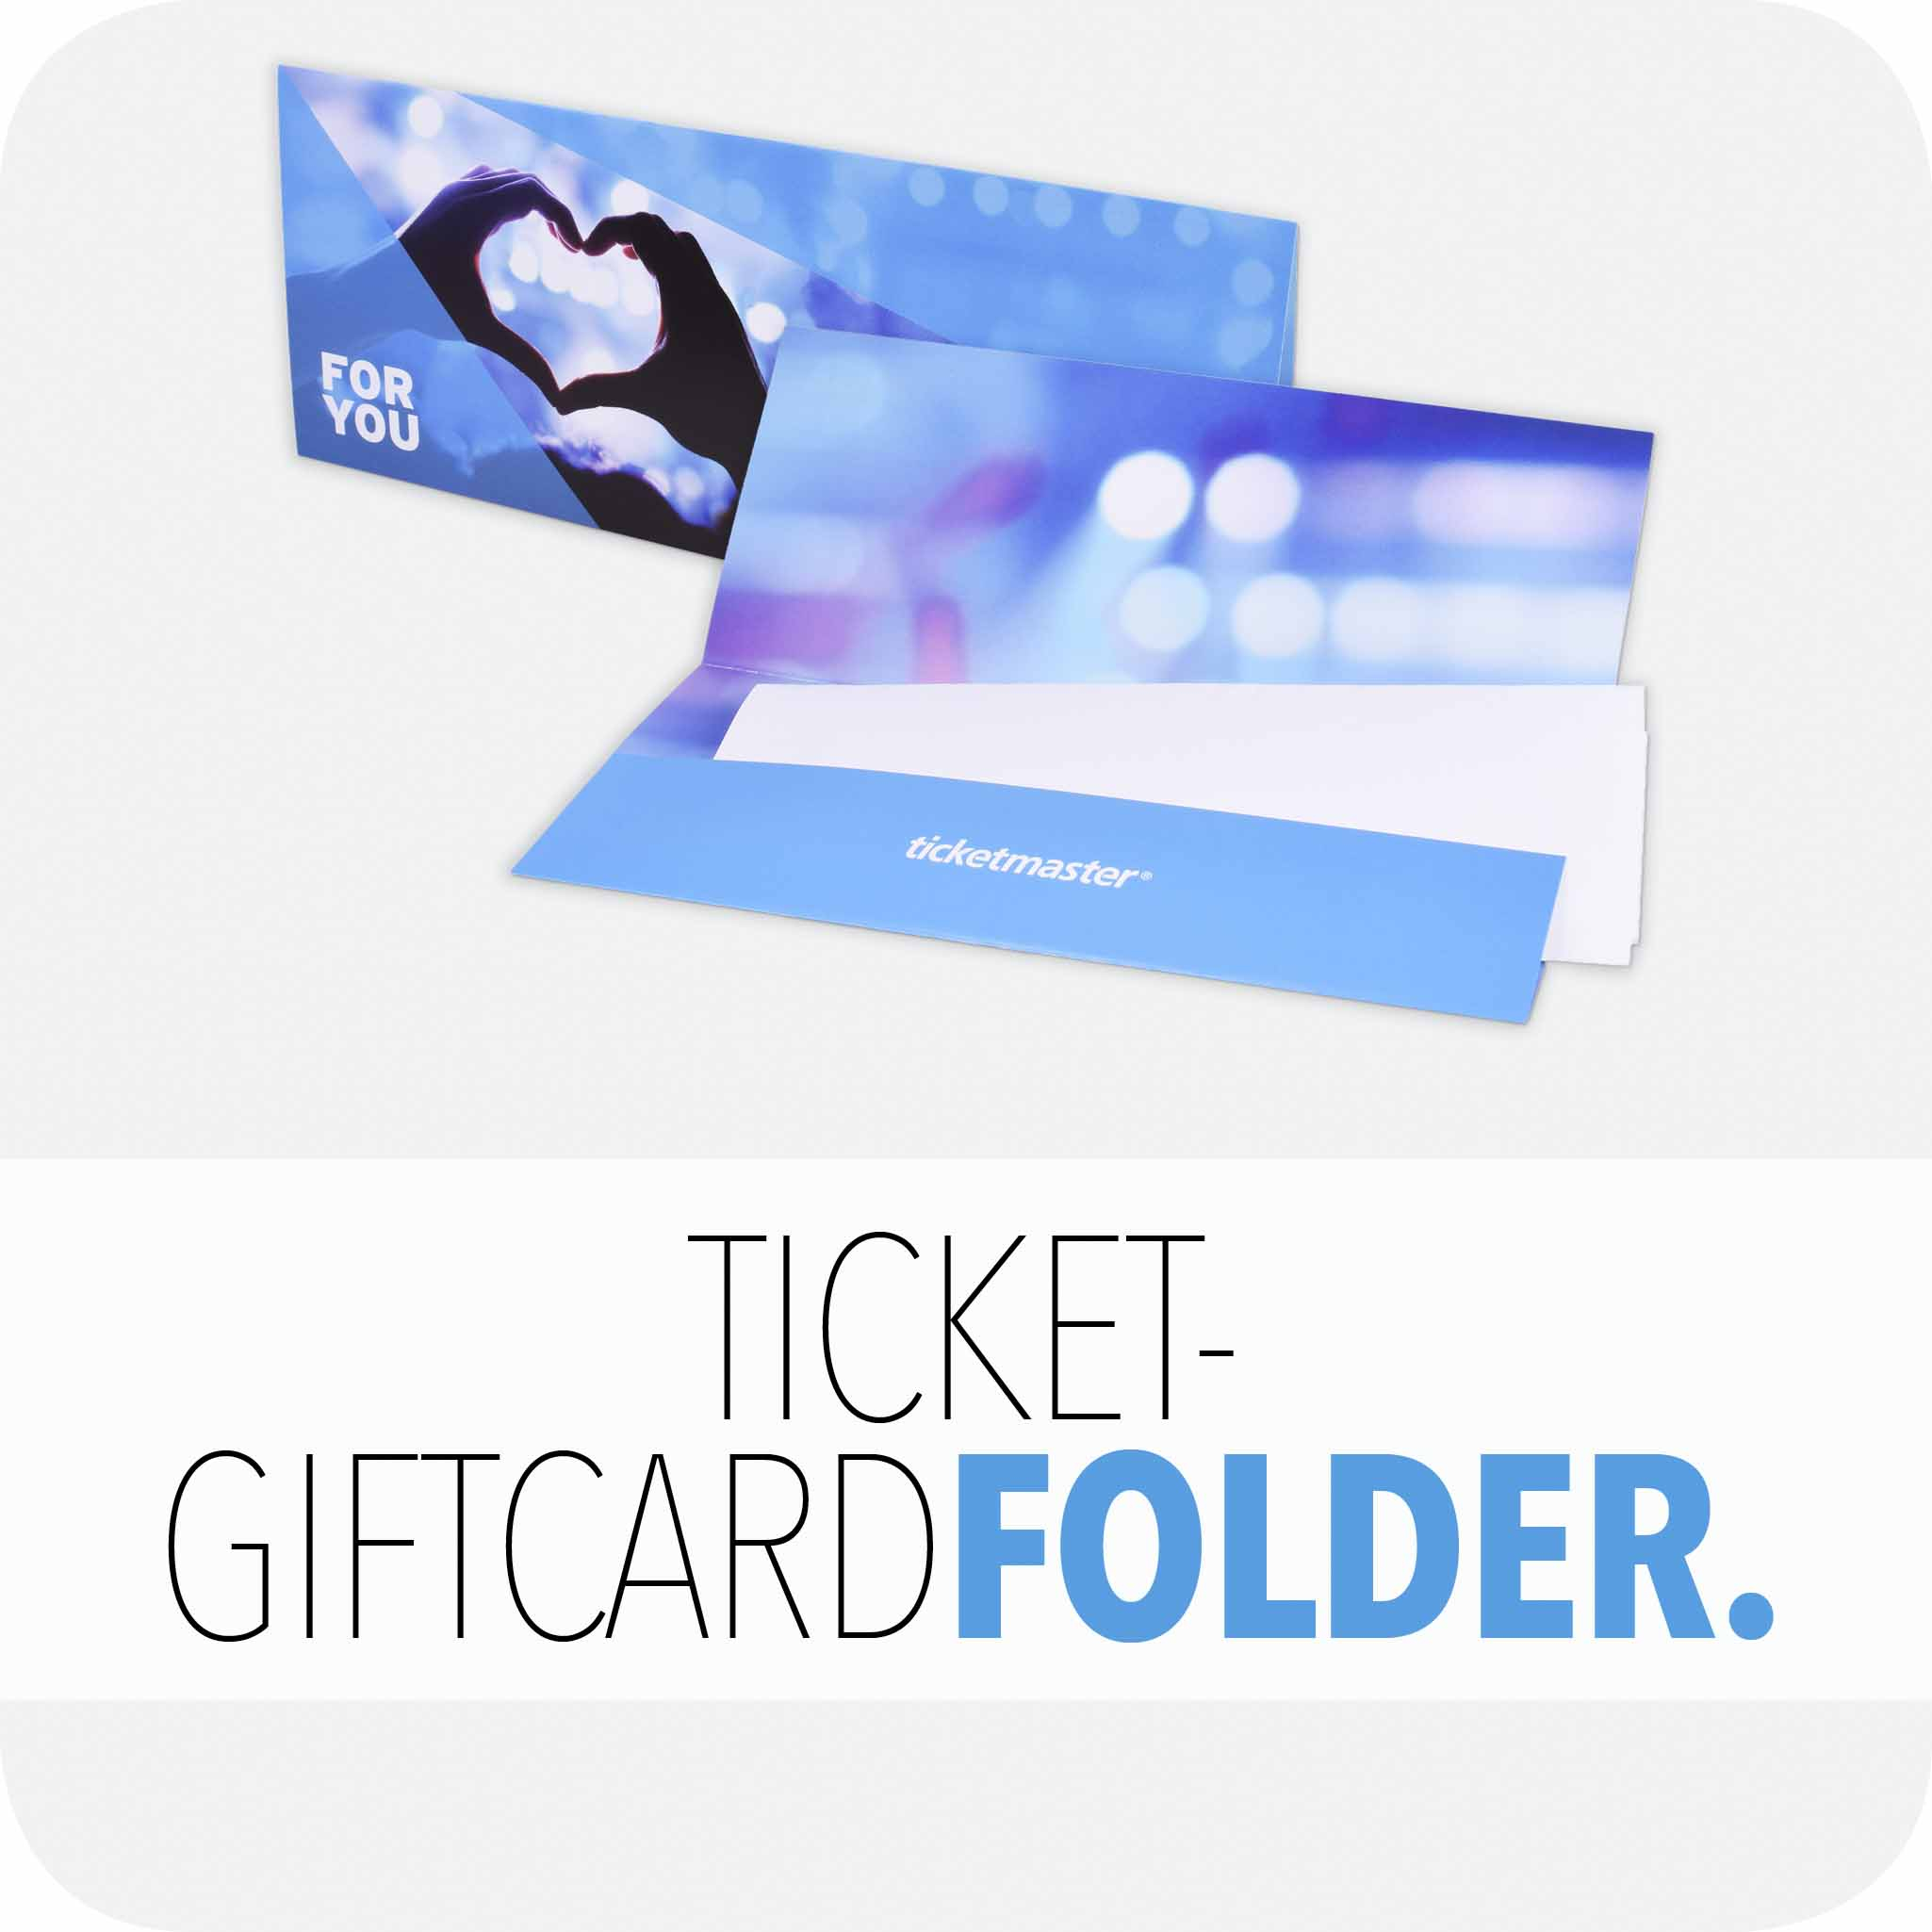 Ticket-/giftcard folder